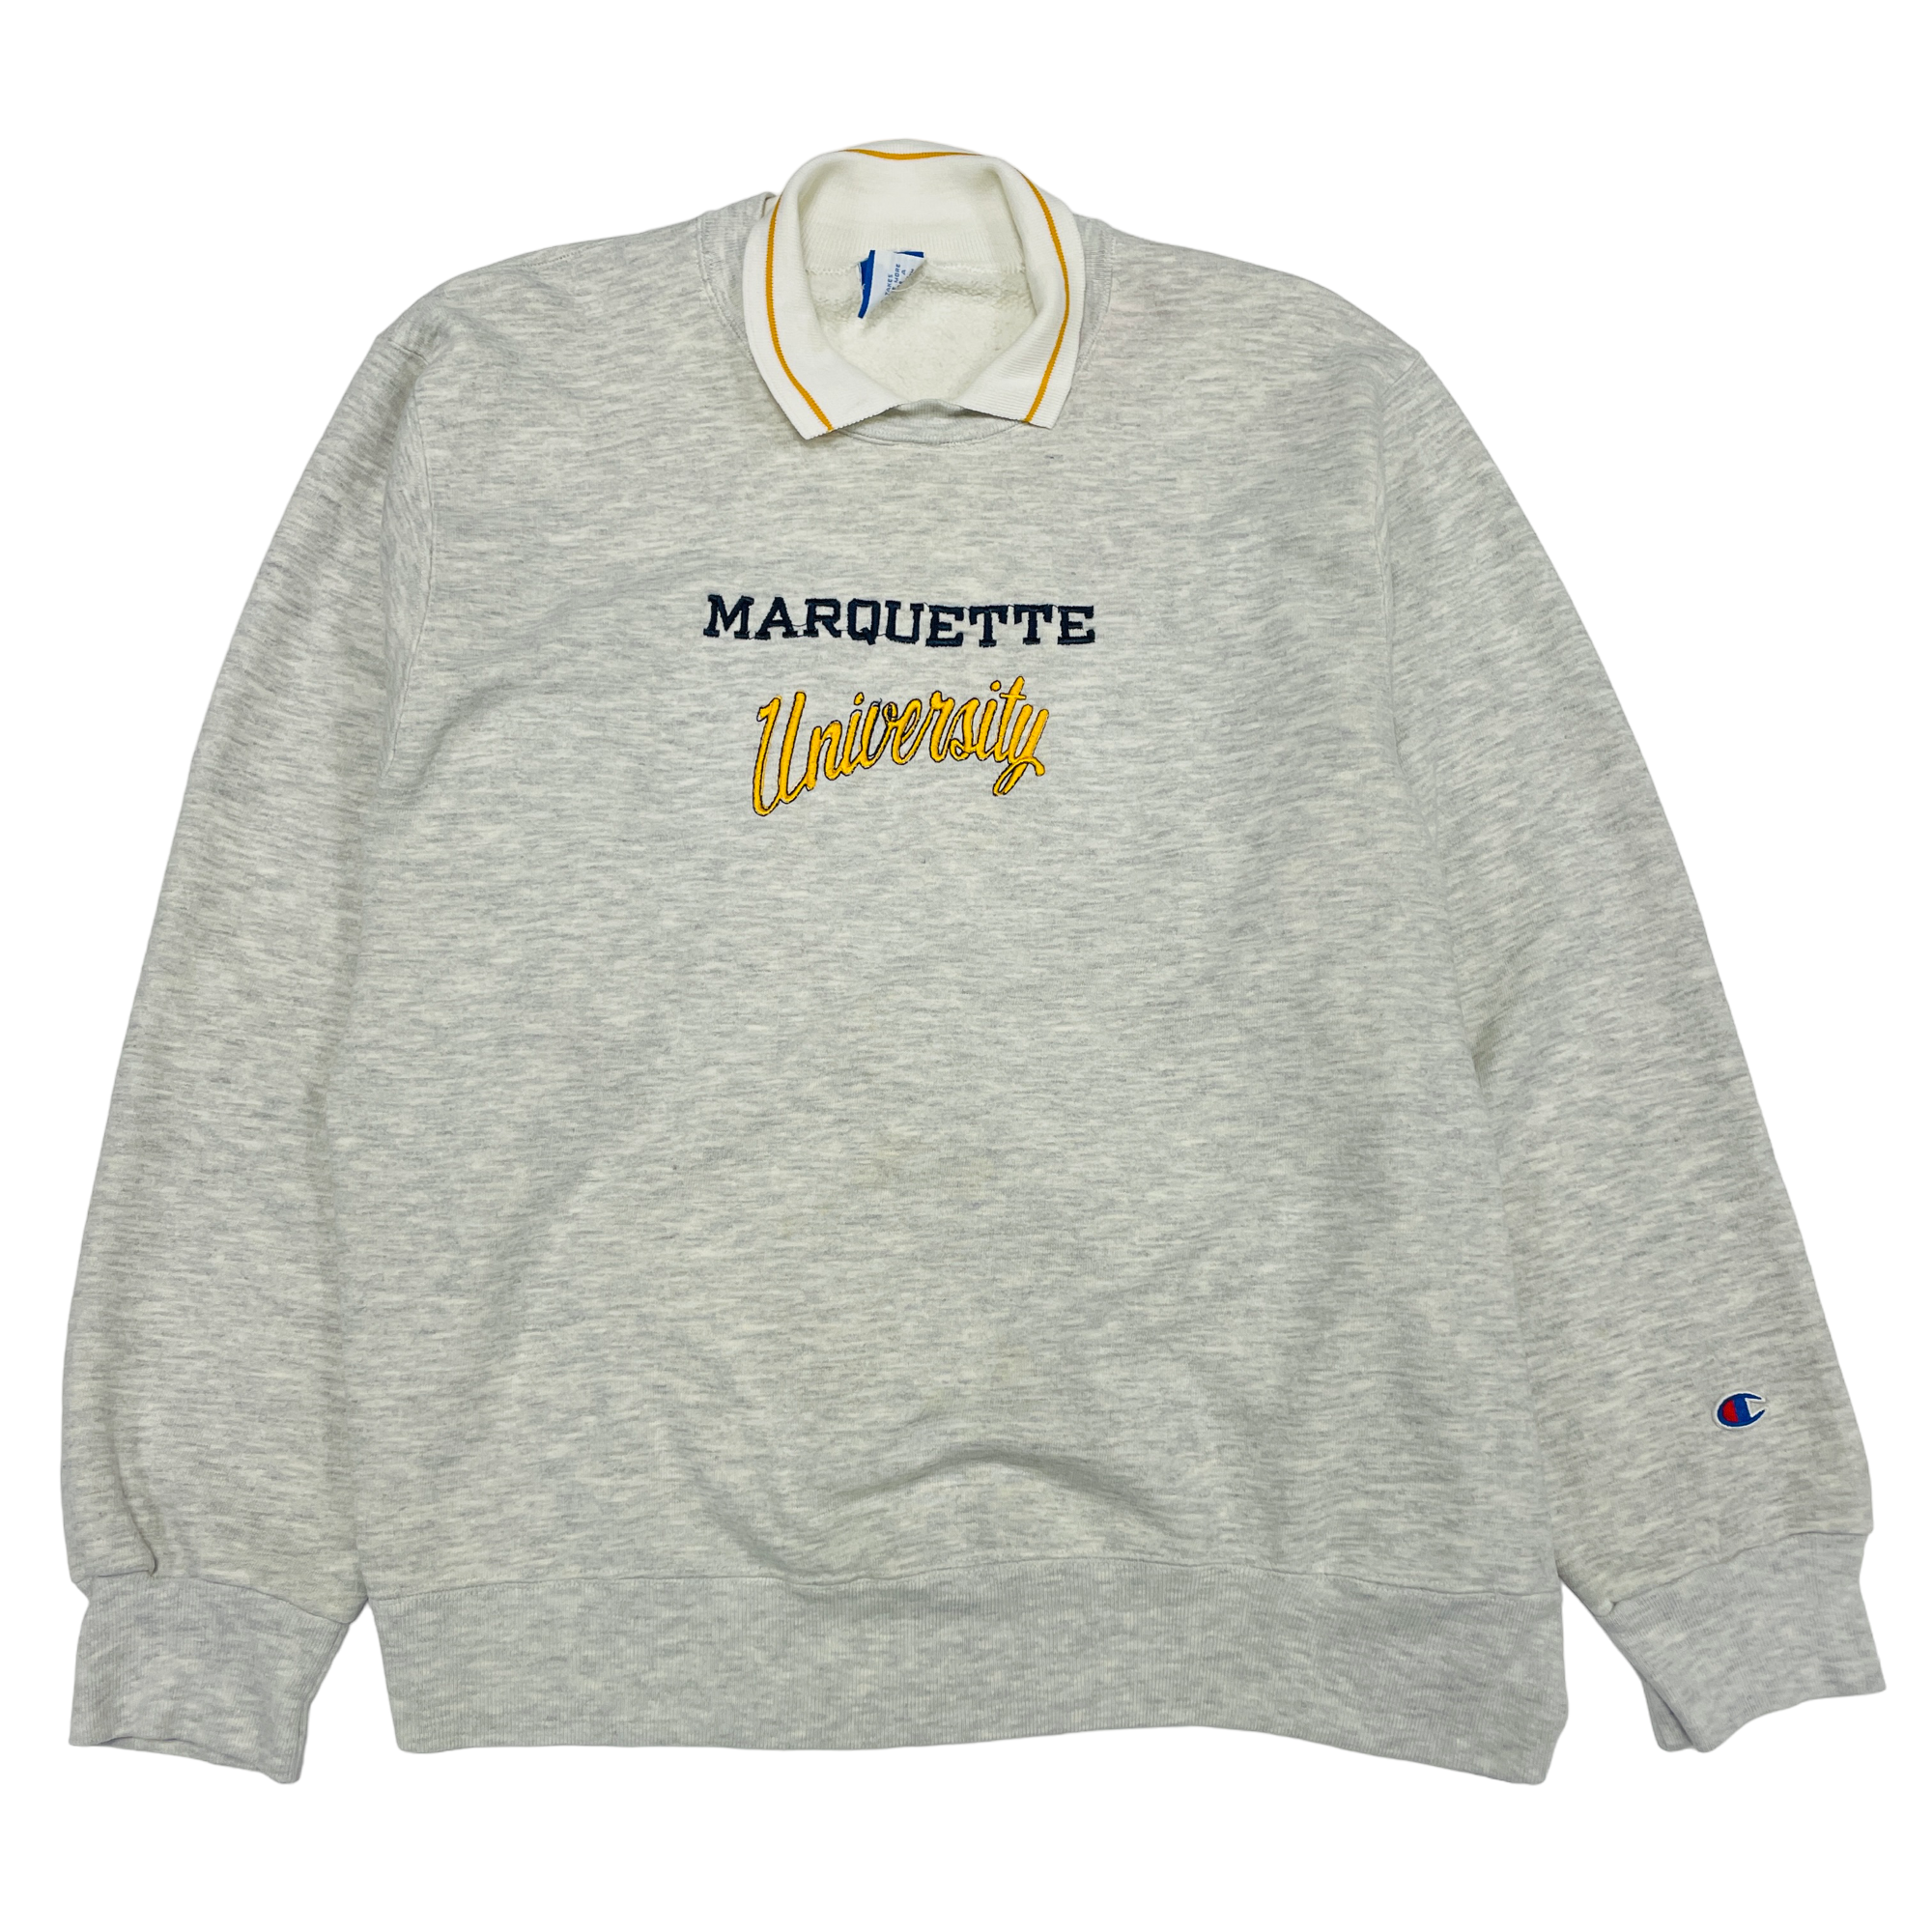 Marquette University Sweatshirt - XL